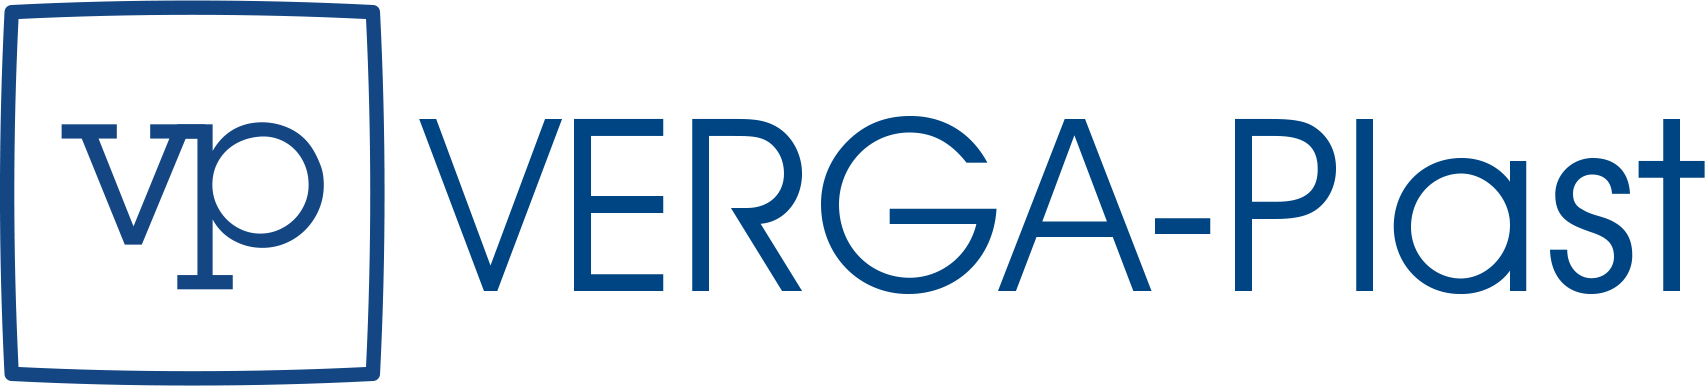 VERGA-Plast logo